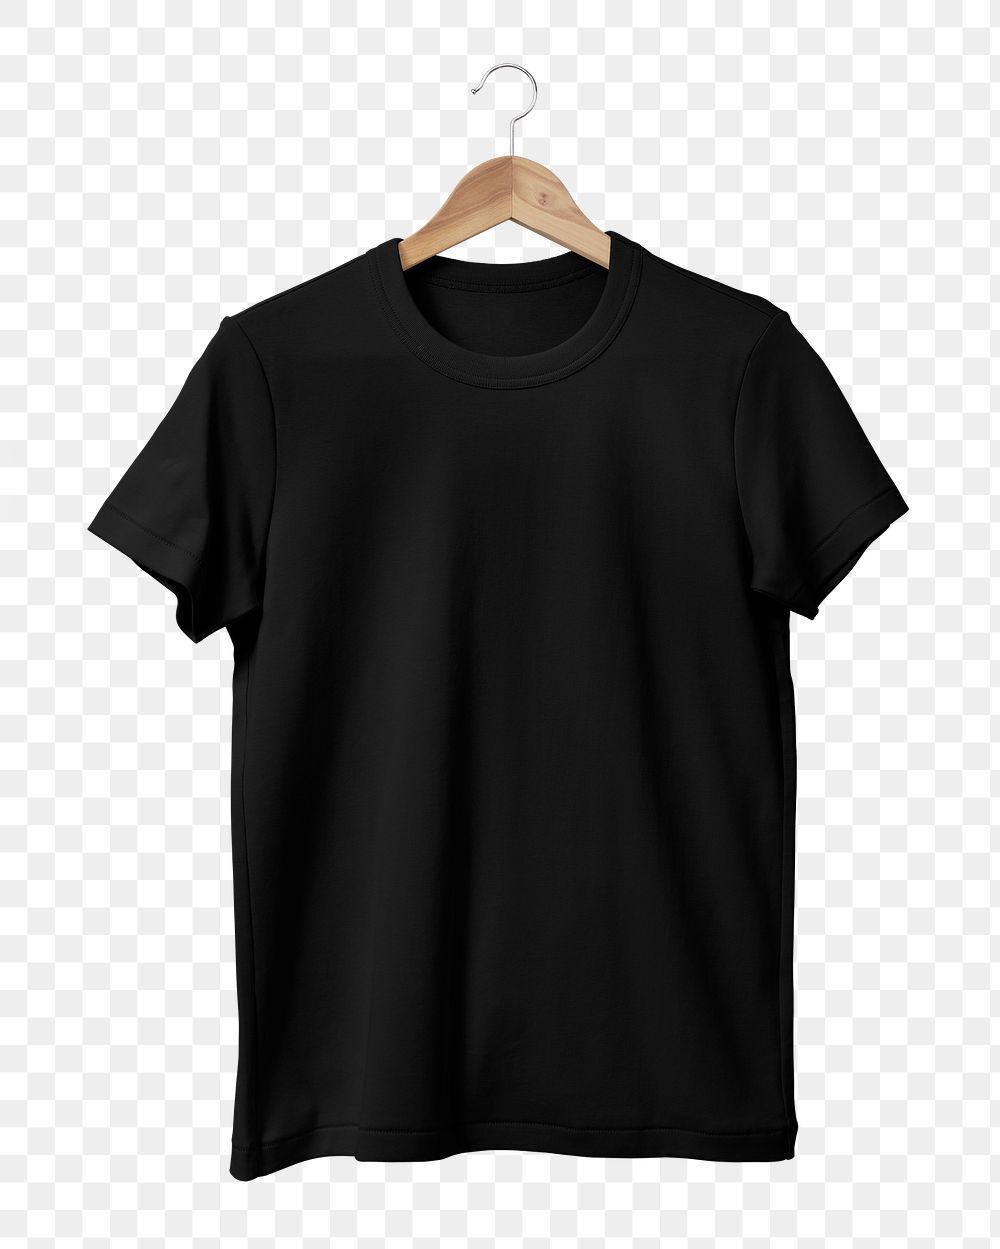 Black t-shirt png, simple unisex fashion, transparent design on transparent background